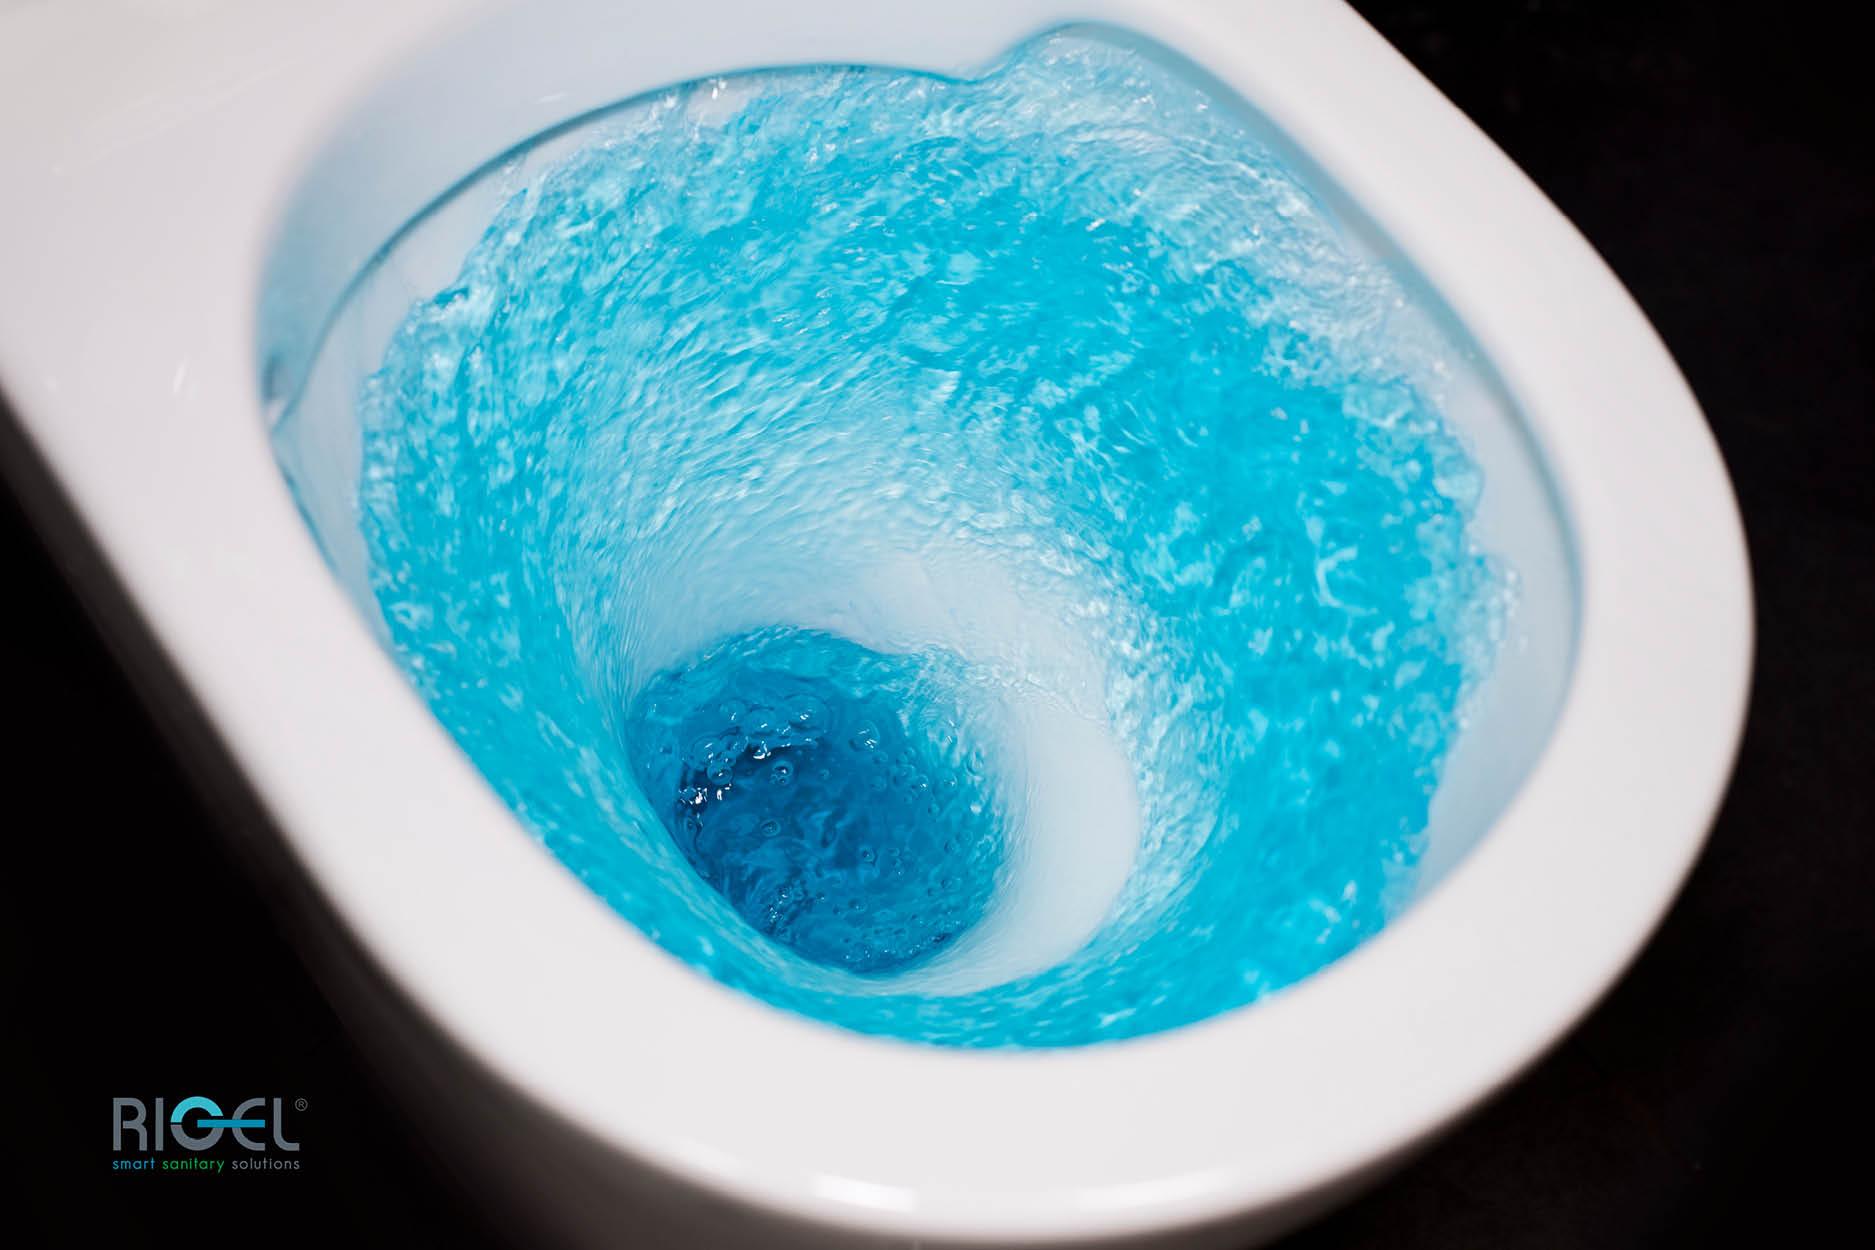 Discover How Rigel’s Sanitaryware is Optimising Hygiene in Communal Bathrooms